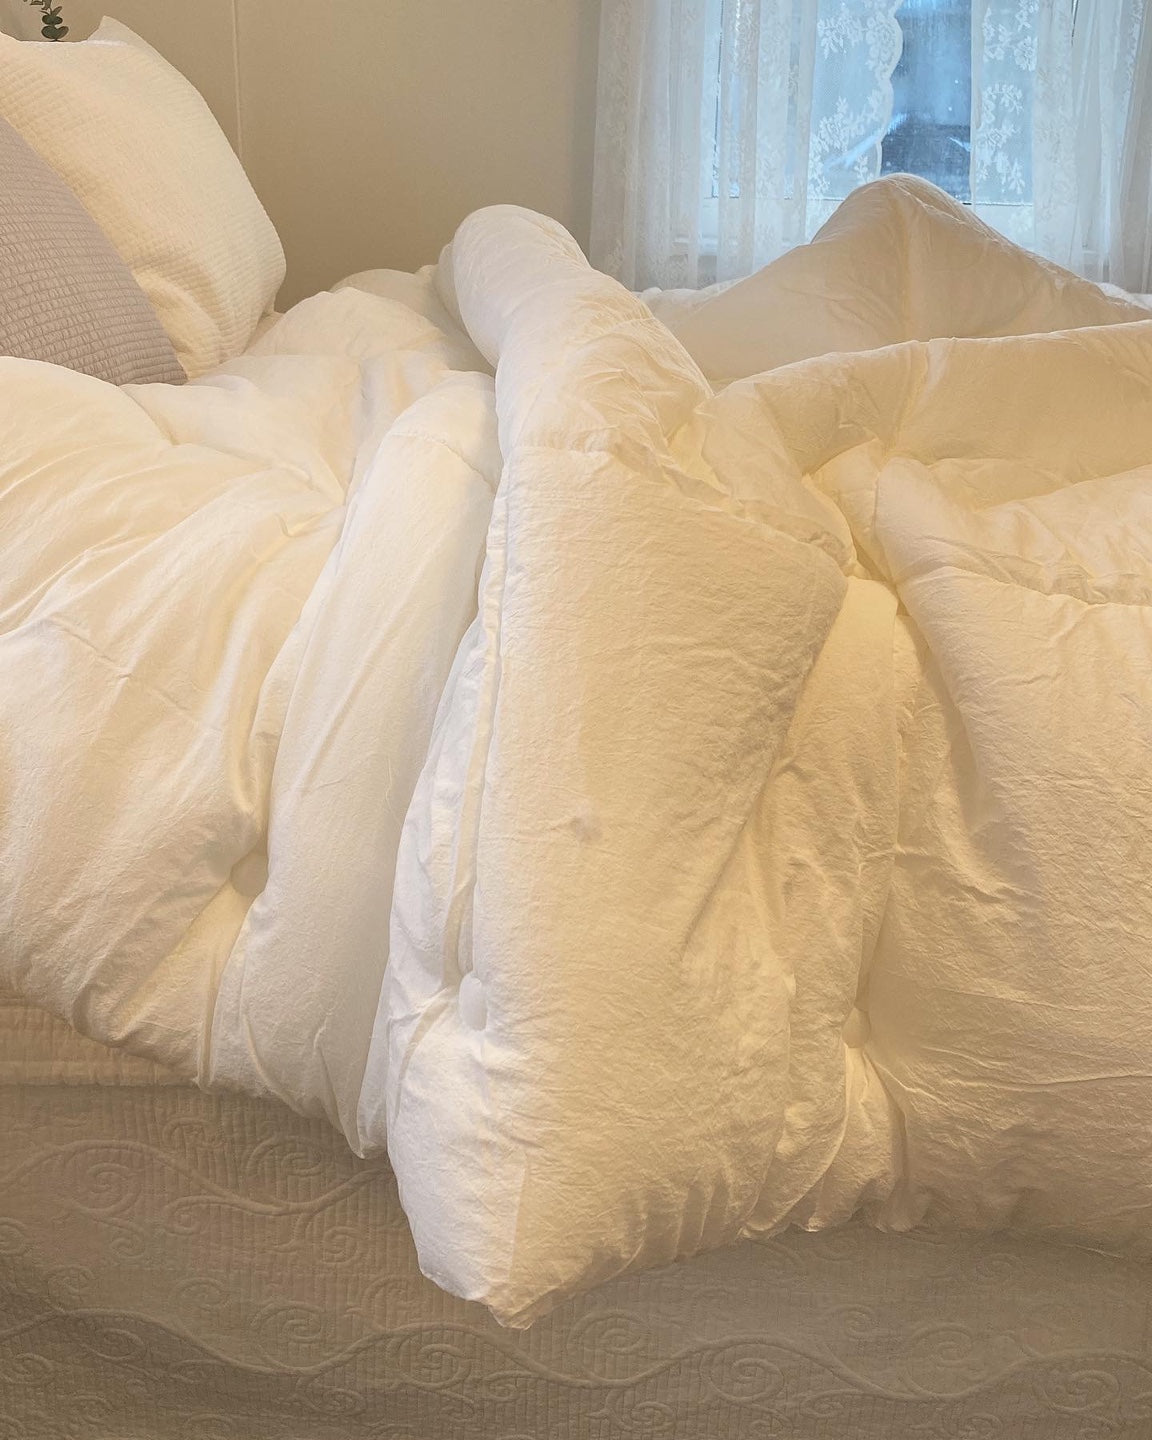 100% Pigment Washing Cotton Cloud Comforter_Creamy White